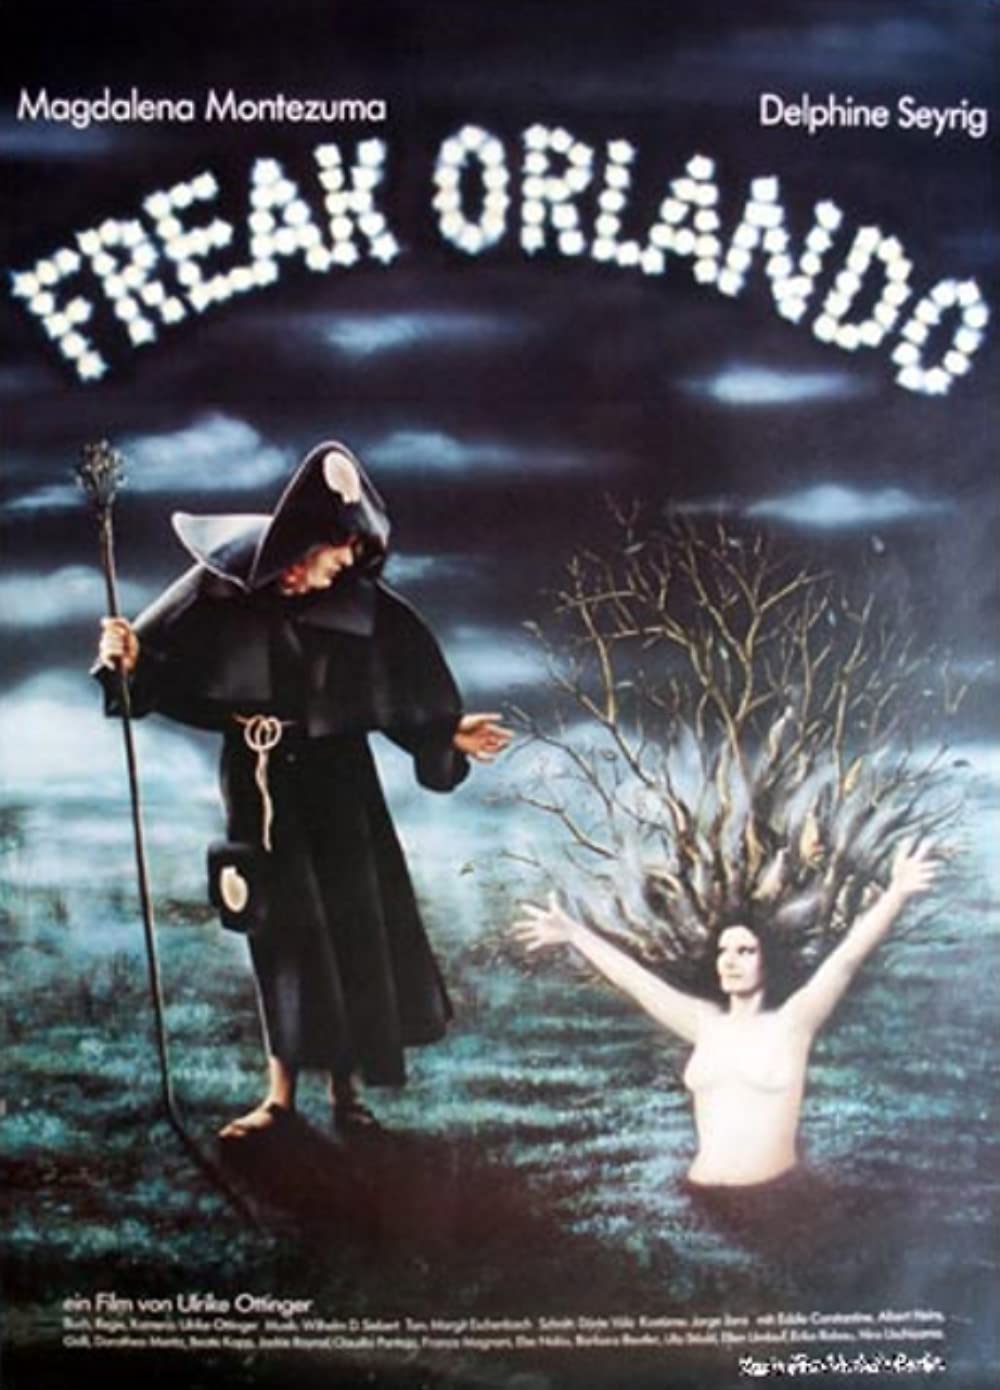 Filmbeschreibung zu Freak Orlando